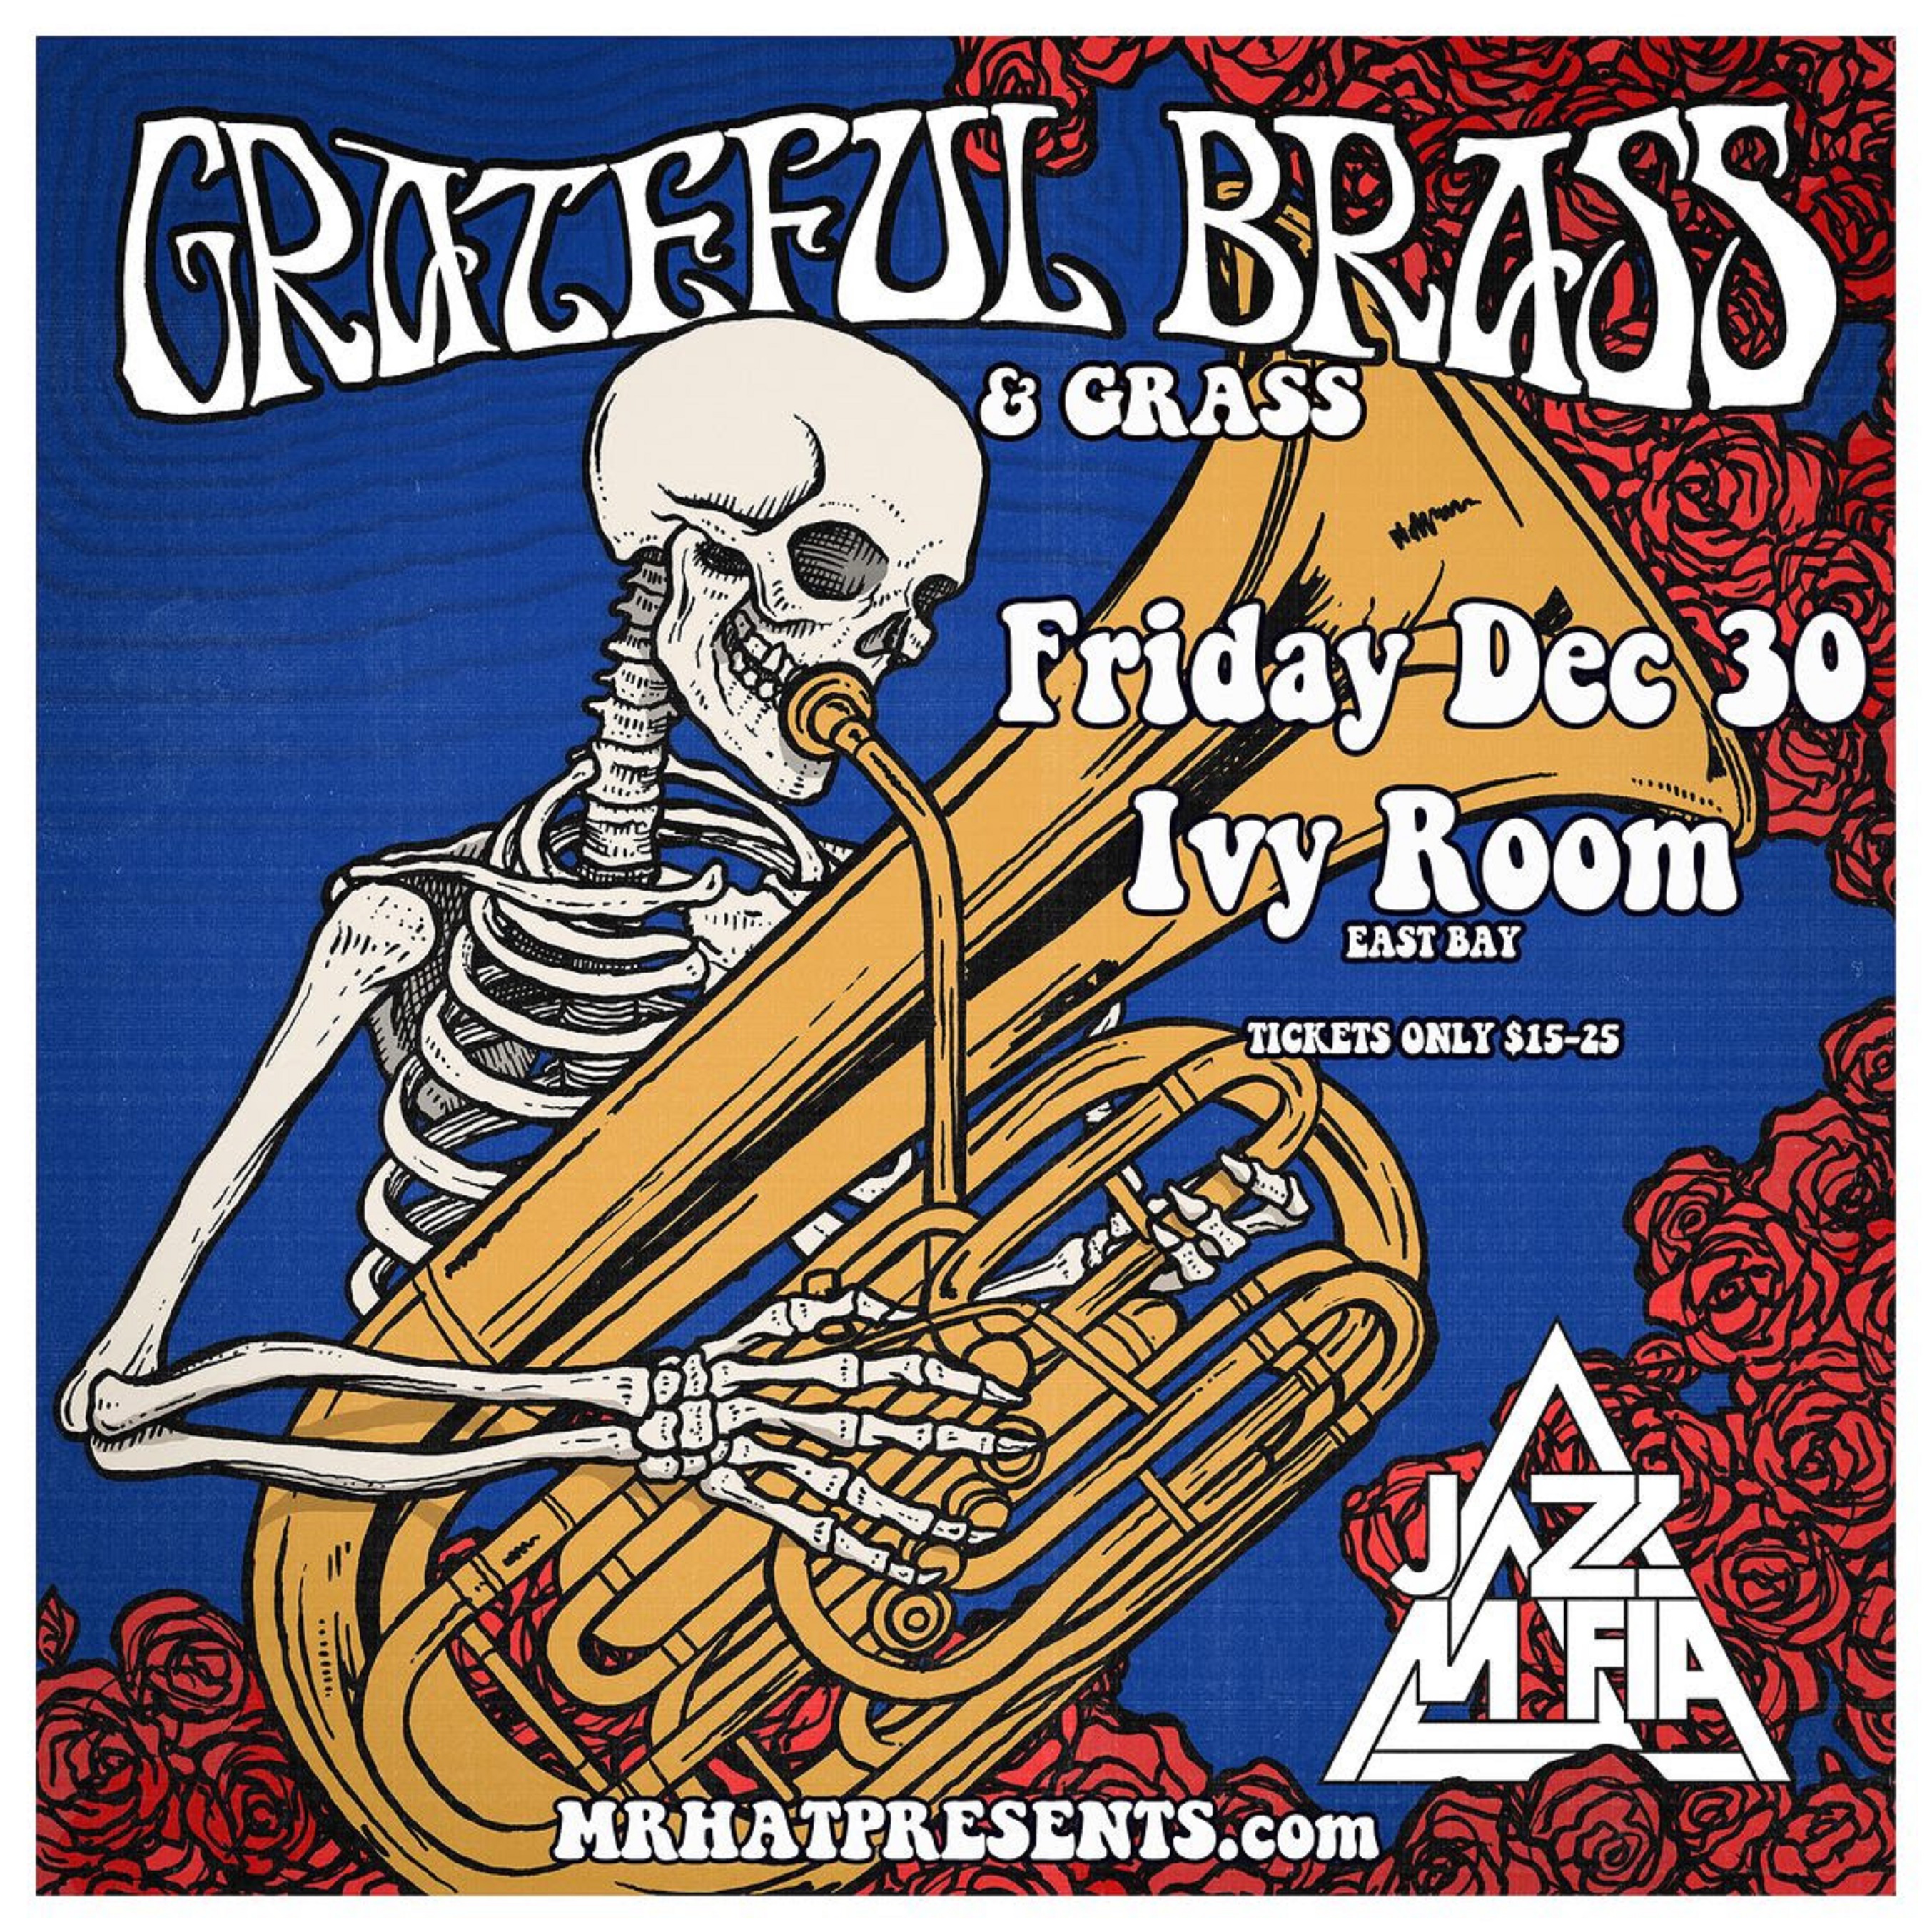 Grateful Brass & Grass New Year’s Eve Eve Party Fri 12/30